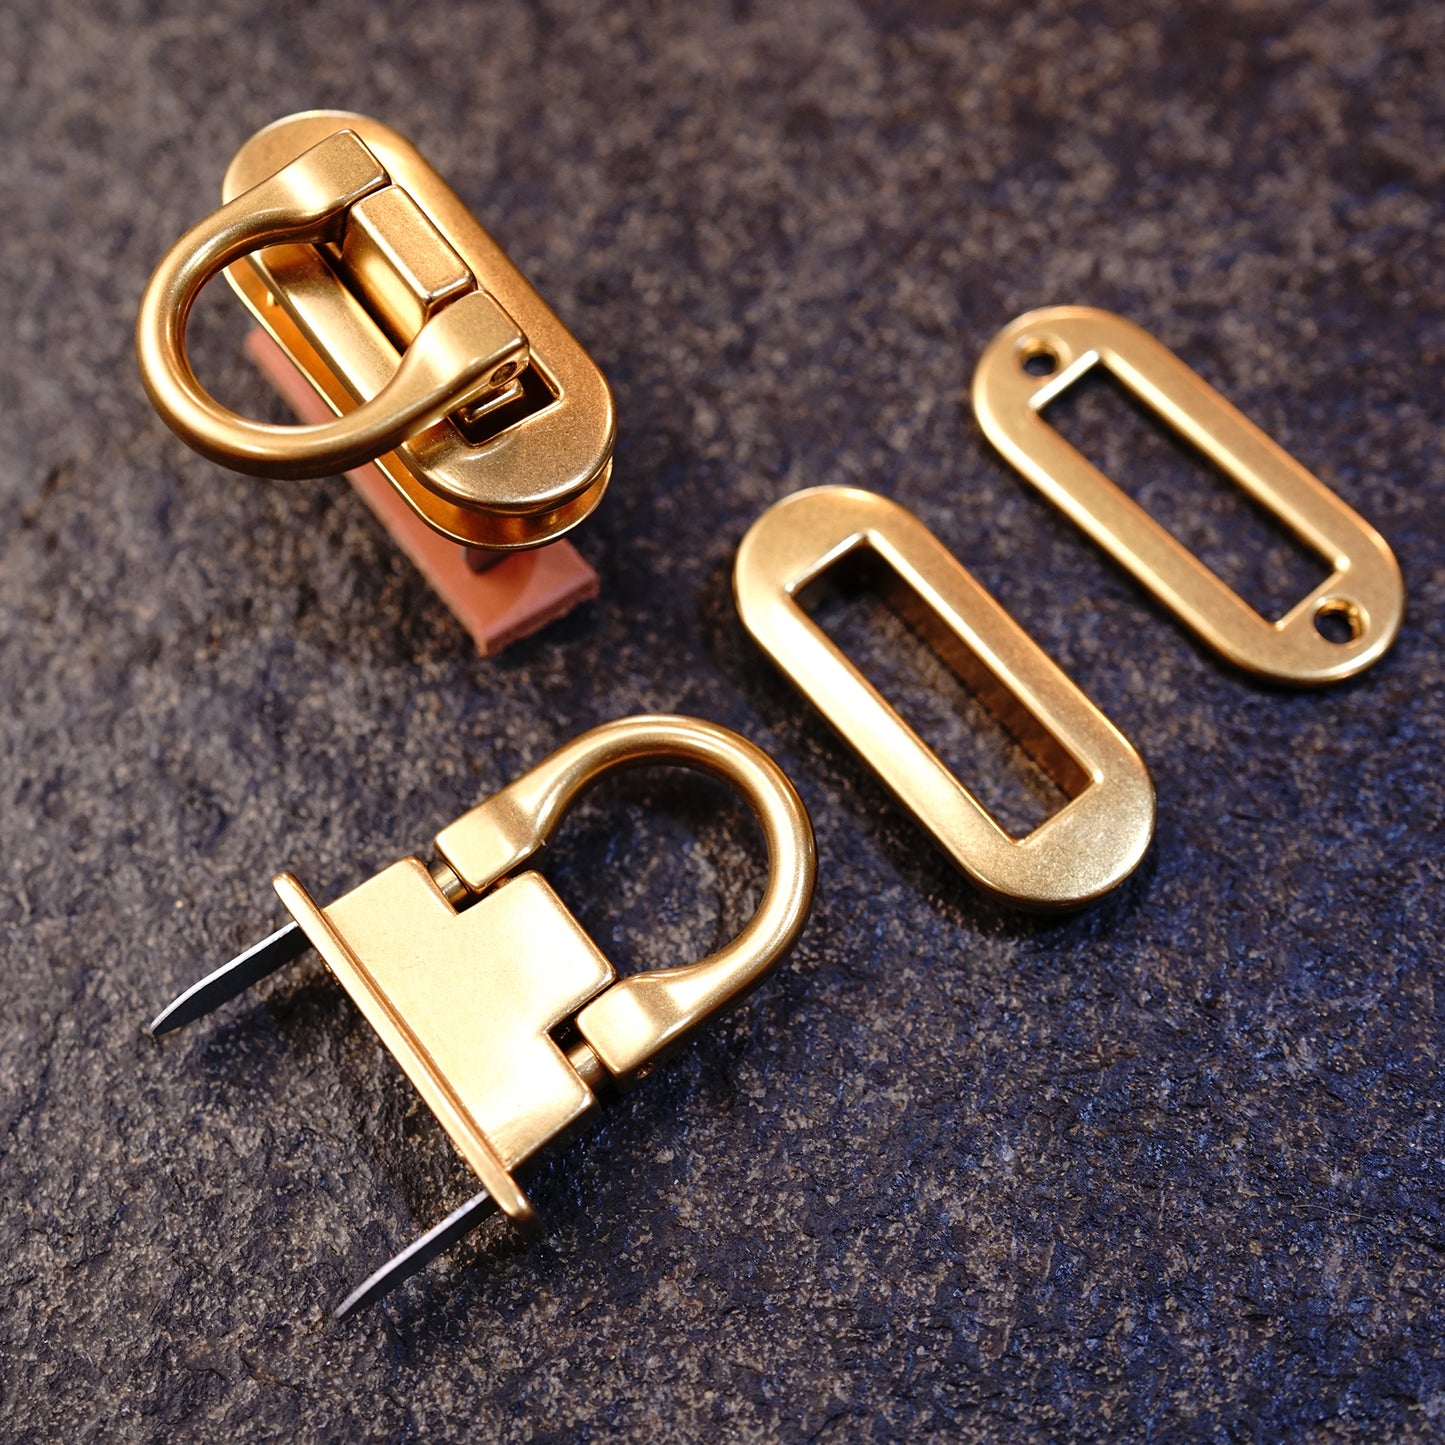 Oval combination lock